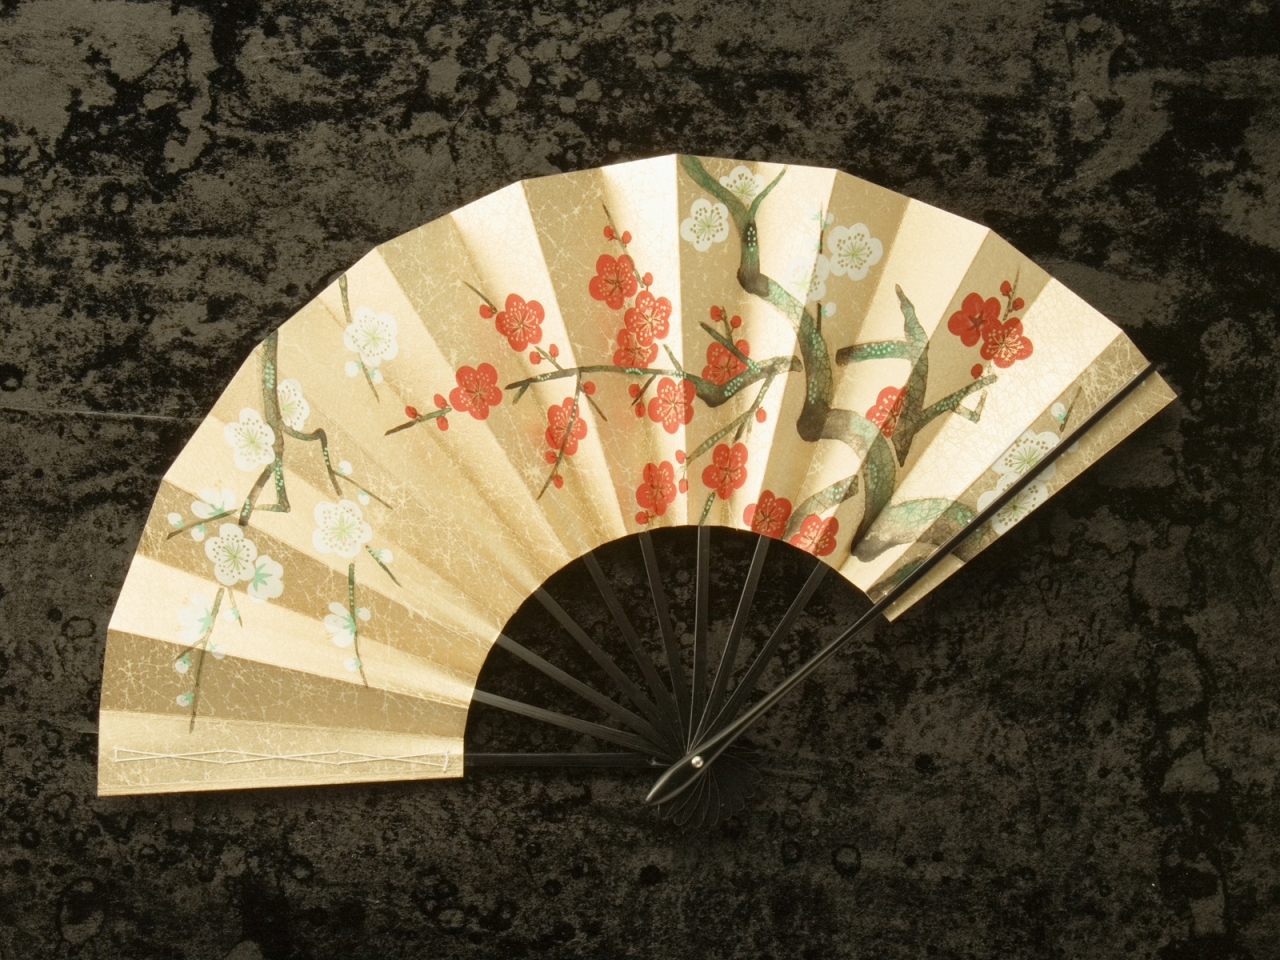 Vintage Fan for 1280 x 960 resolution